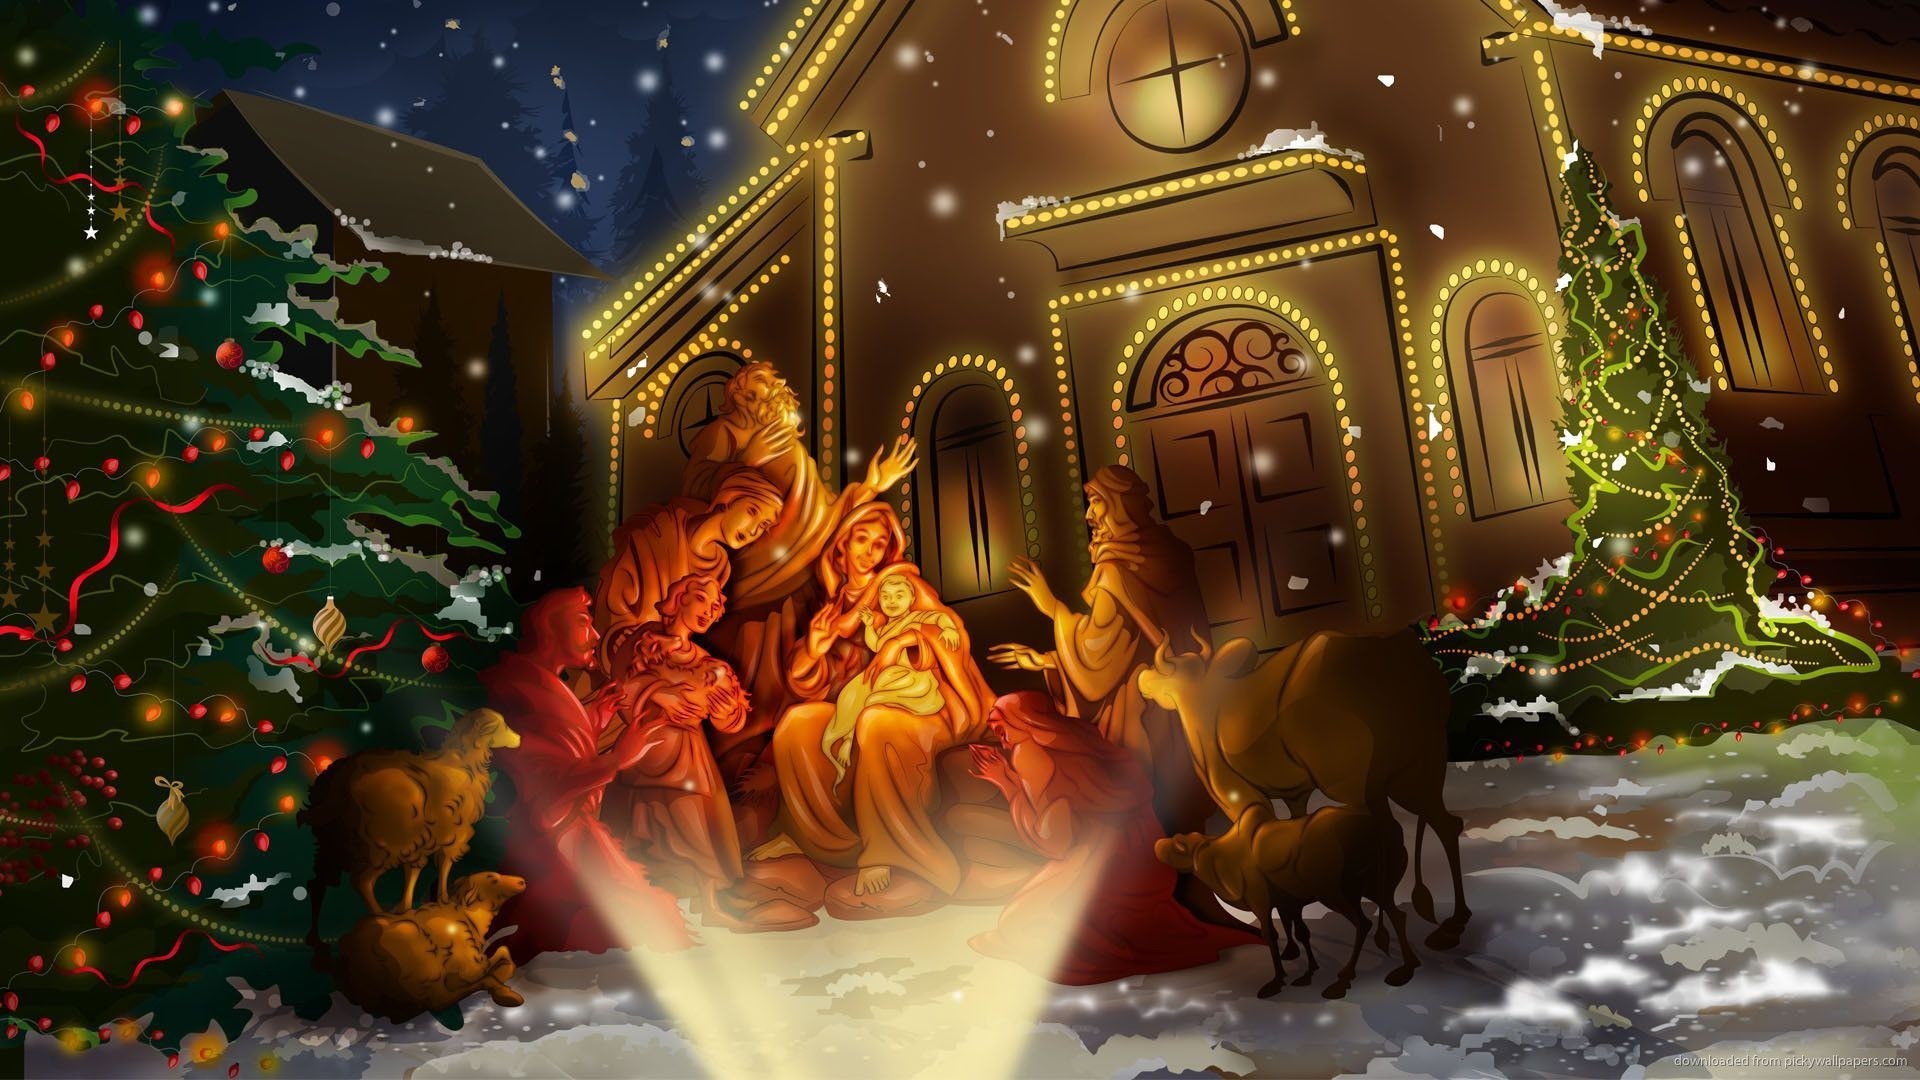 1920x1080 Christmas Scene Wallpaper Download